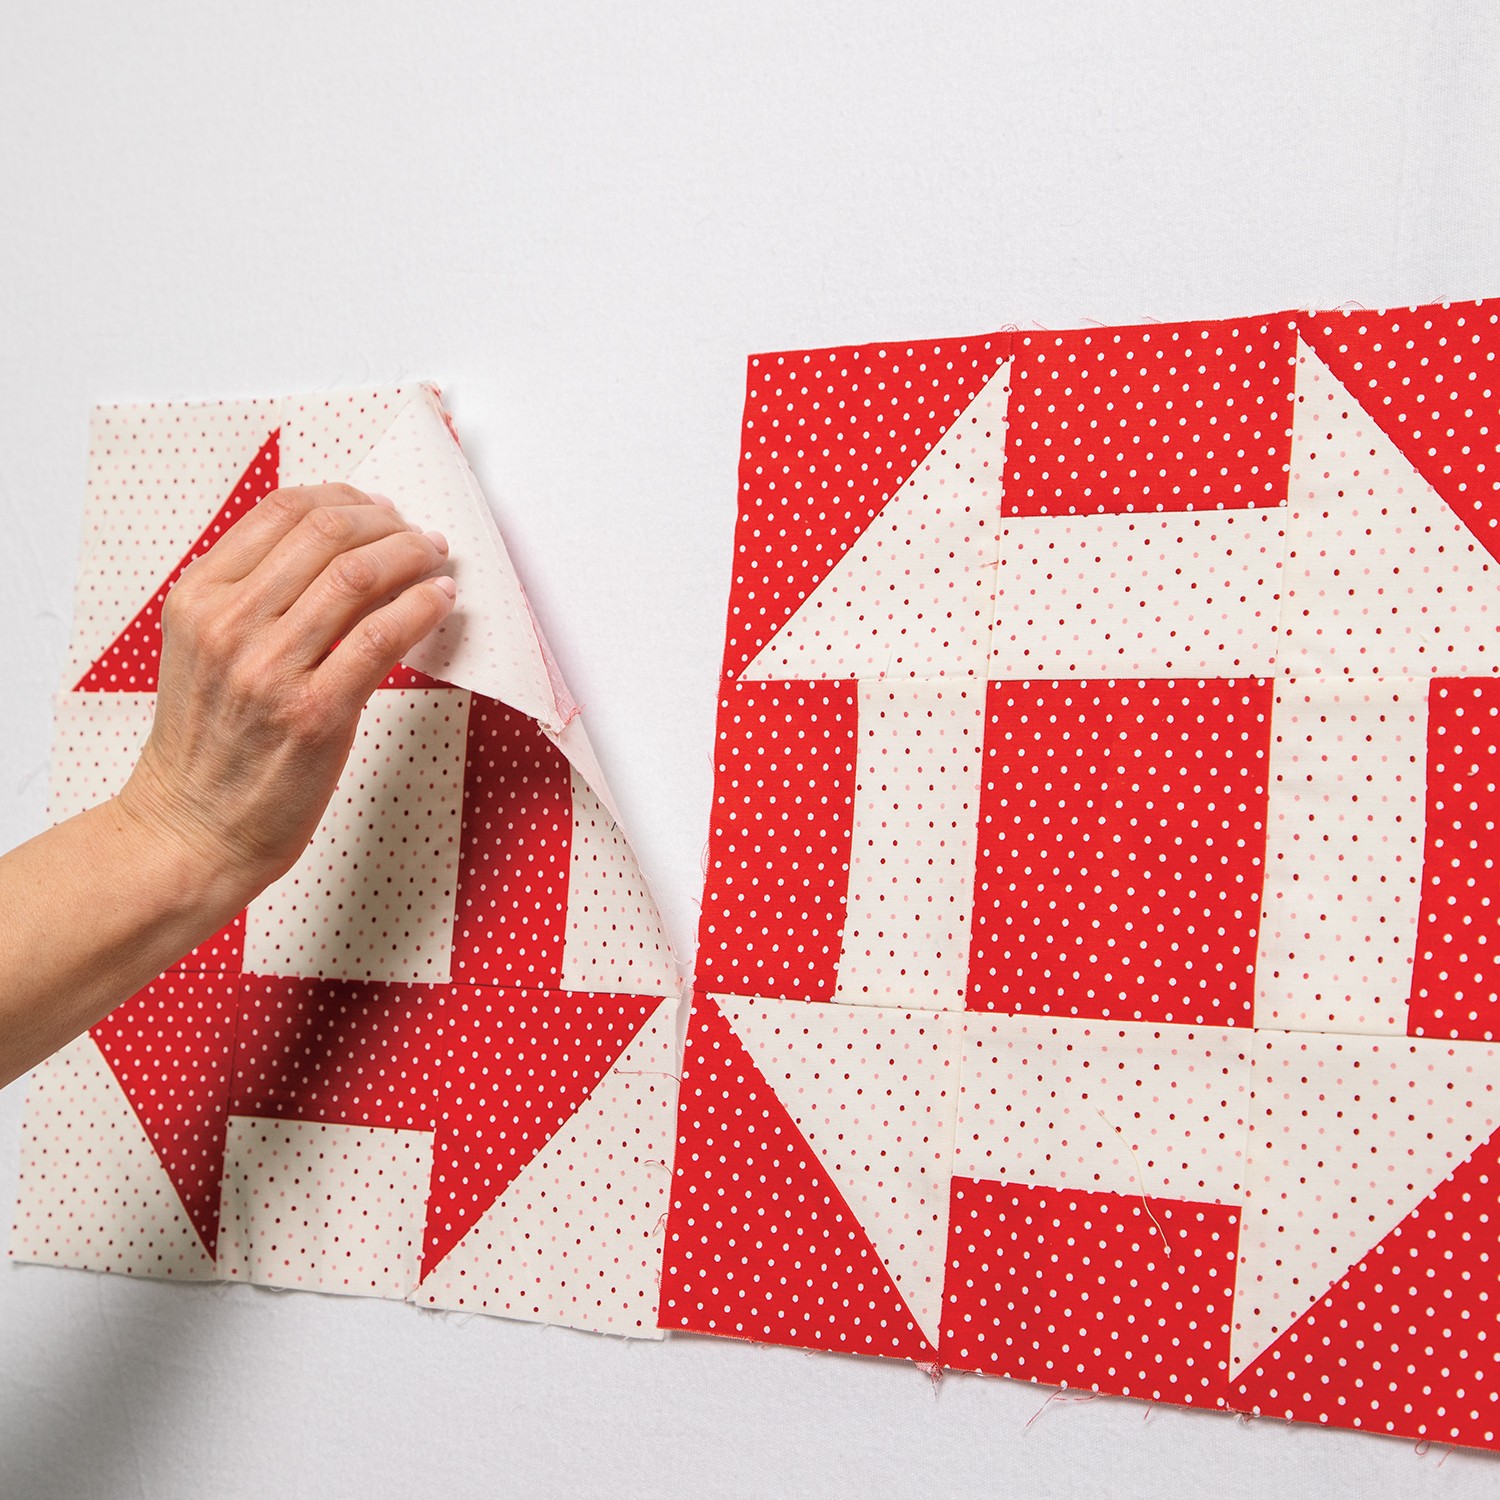 Fibermania: Portable Design Wall  Quilt design wall, Wall design, Quilting  room